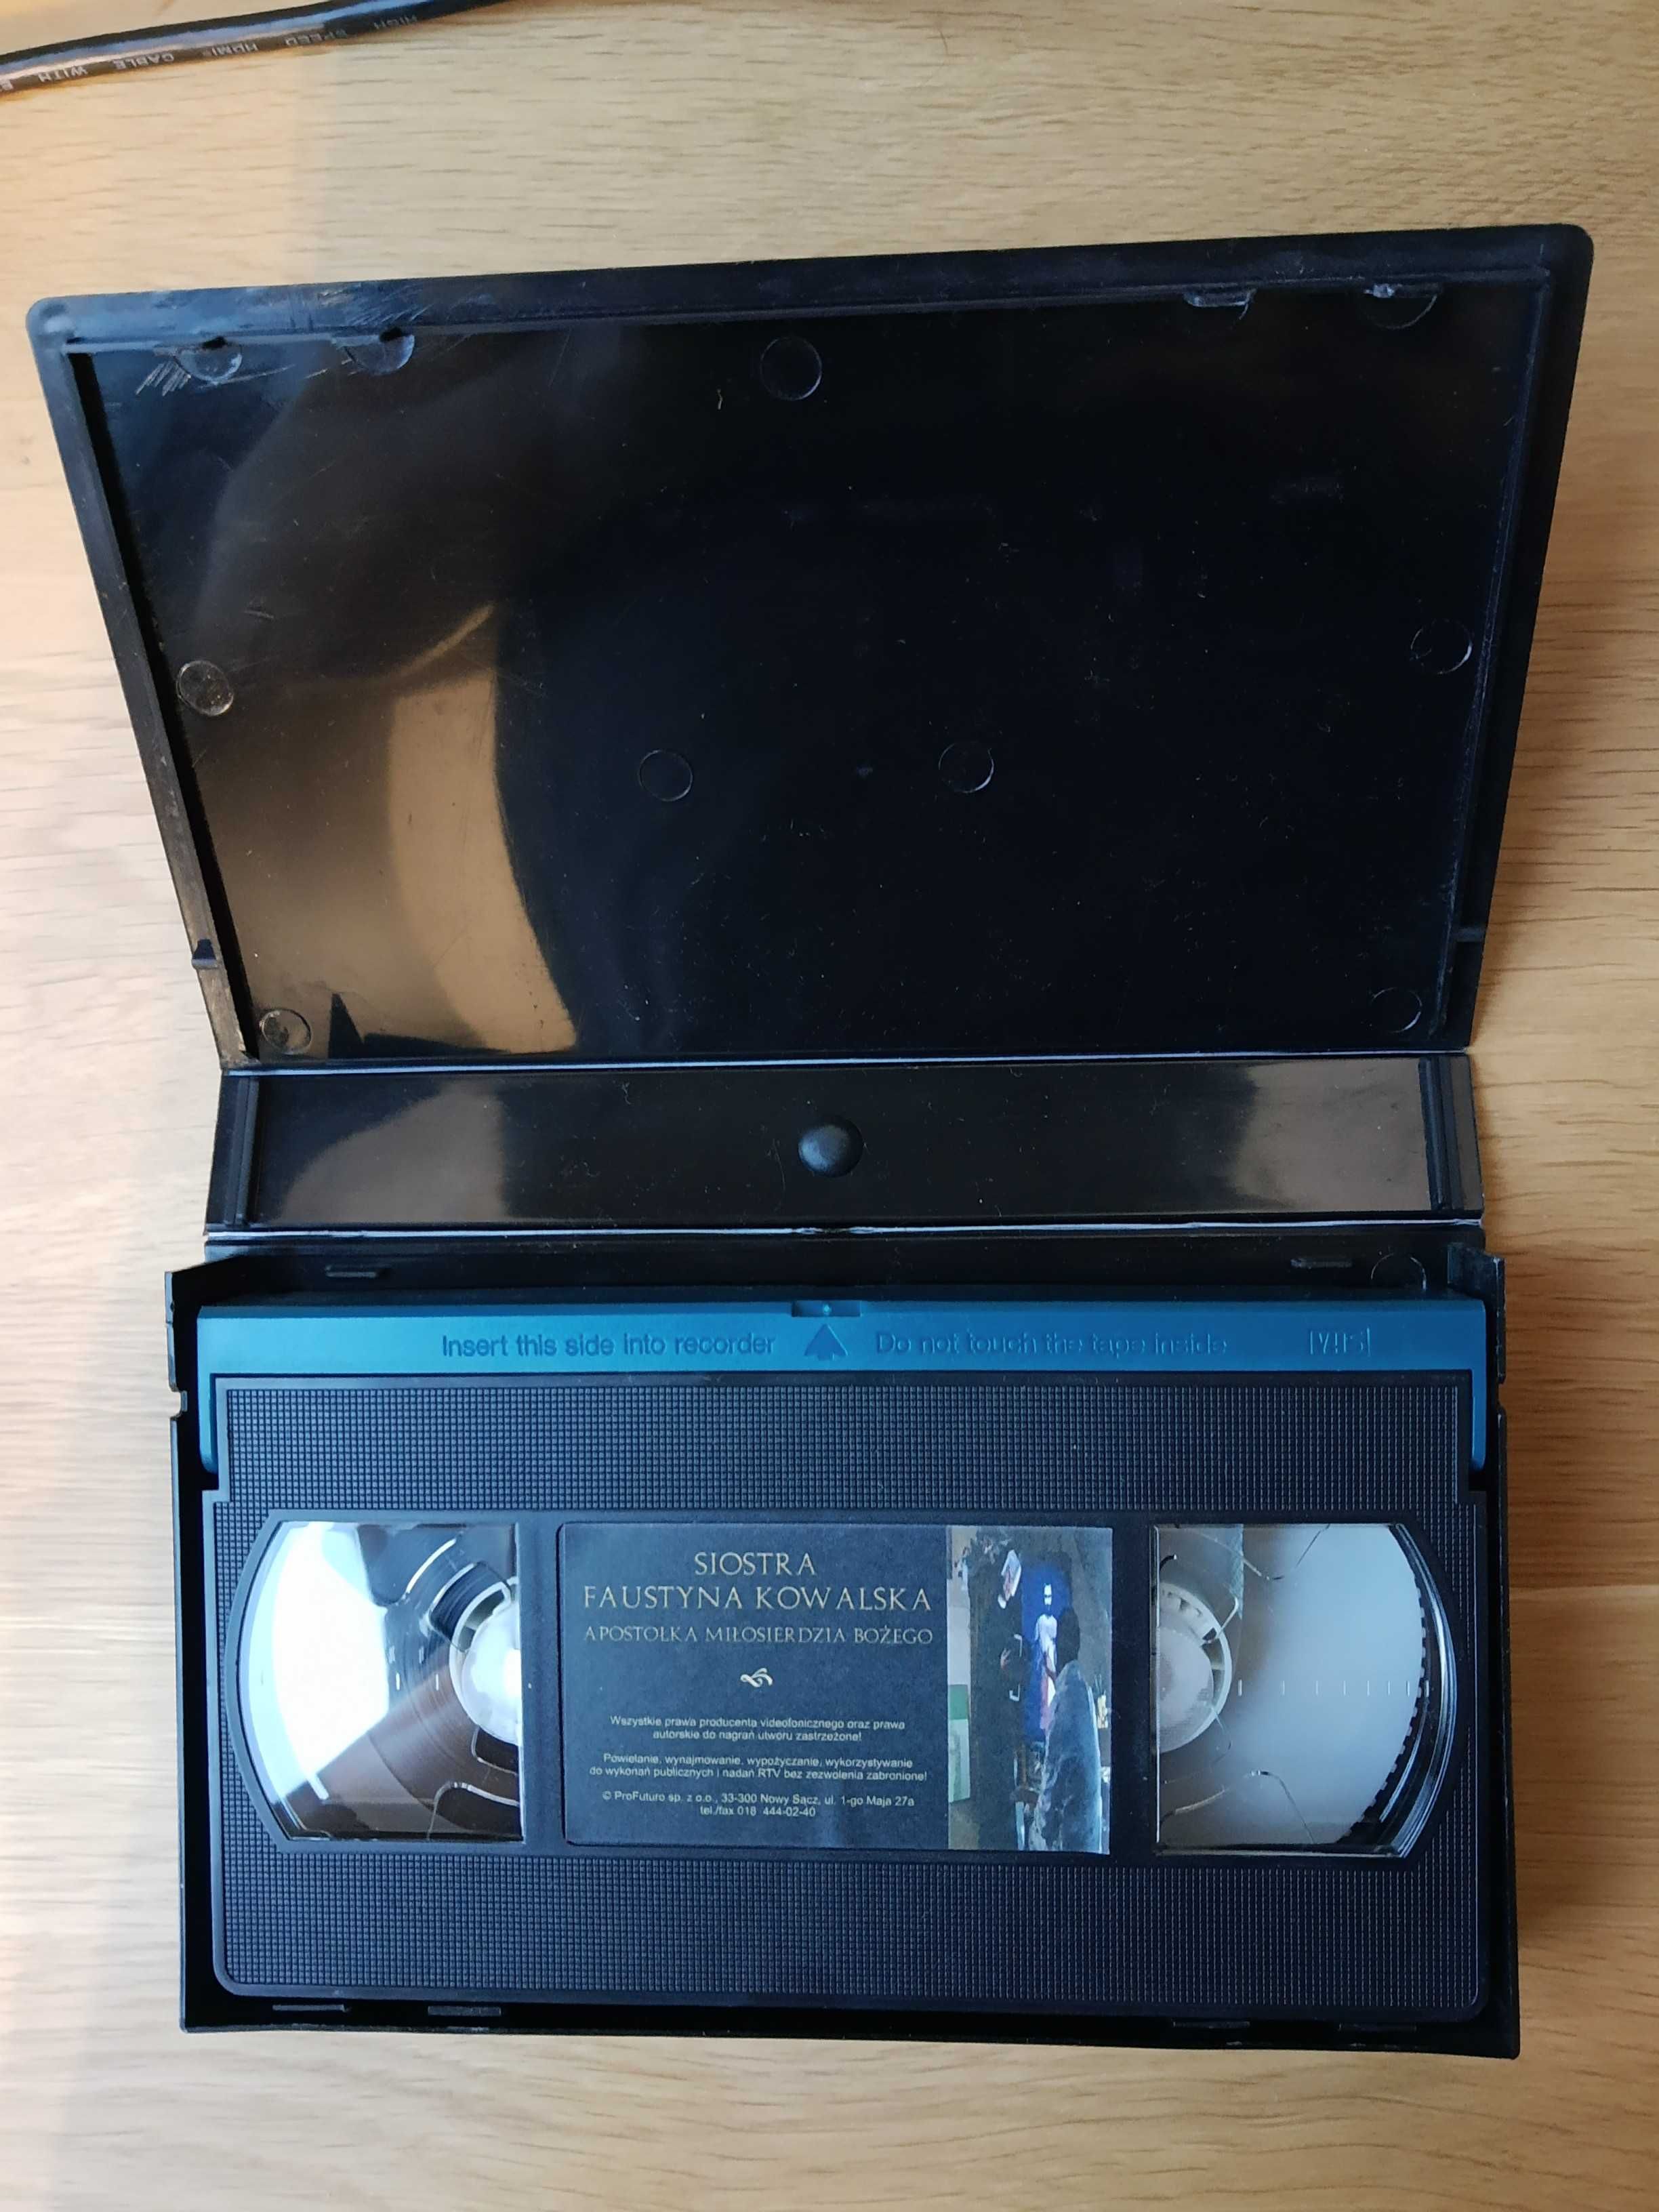 Siostra Faustyna Kowalska apostołka miłosierdzia bożego - kaseta VHS